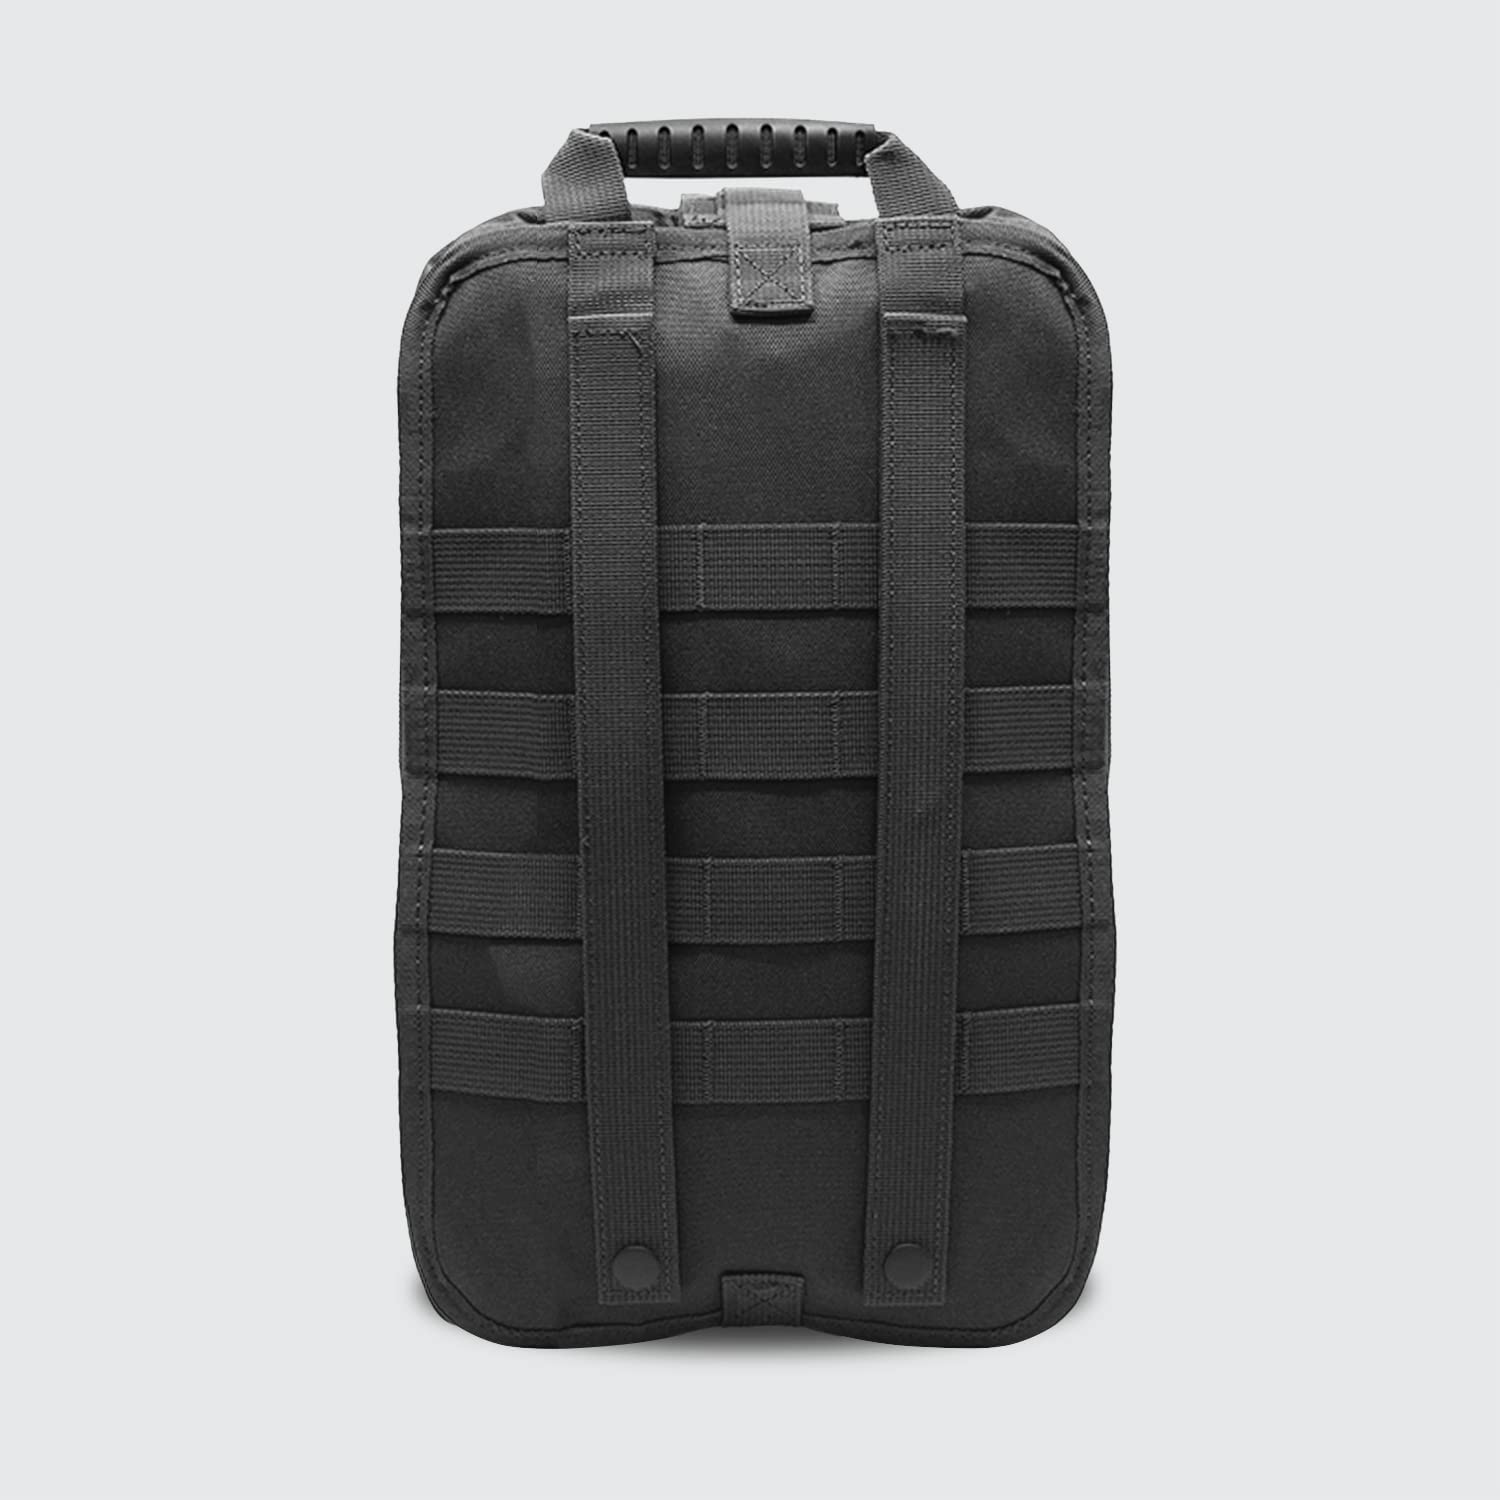 MediTac Large Hawk Type Tactical Trauma Bag Feat. Rip-Away Velcro Fastener Bag Backpack, MOLLE Bag Rucksack Pack